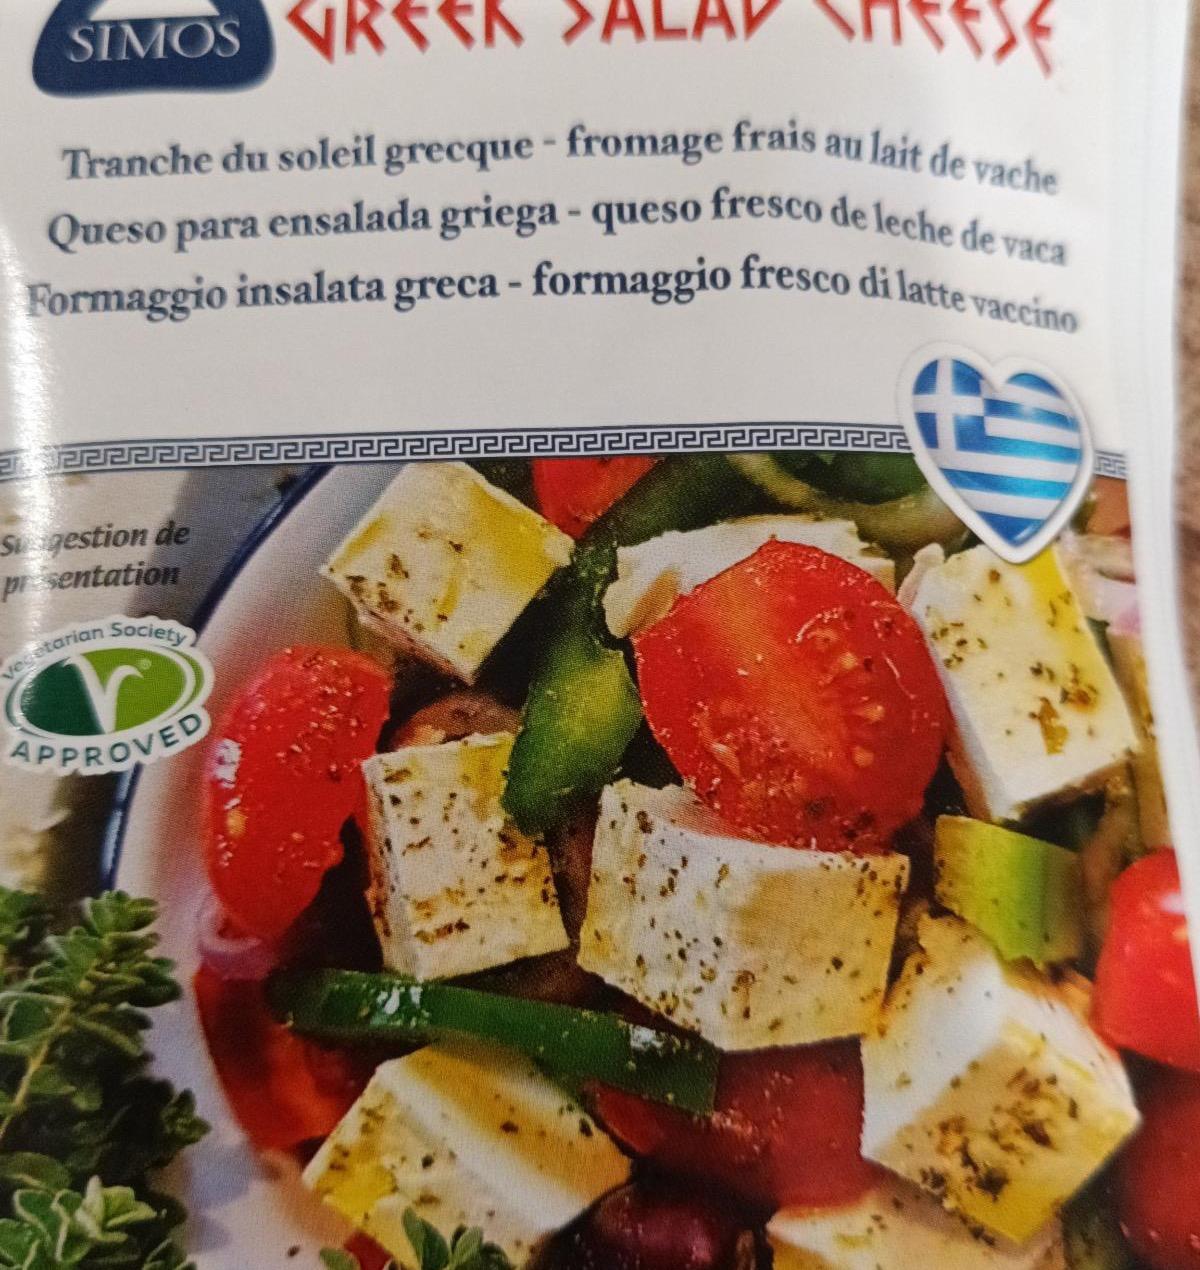 Фото - Greek salad cheese Simos